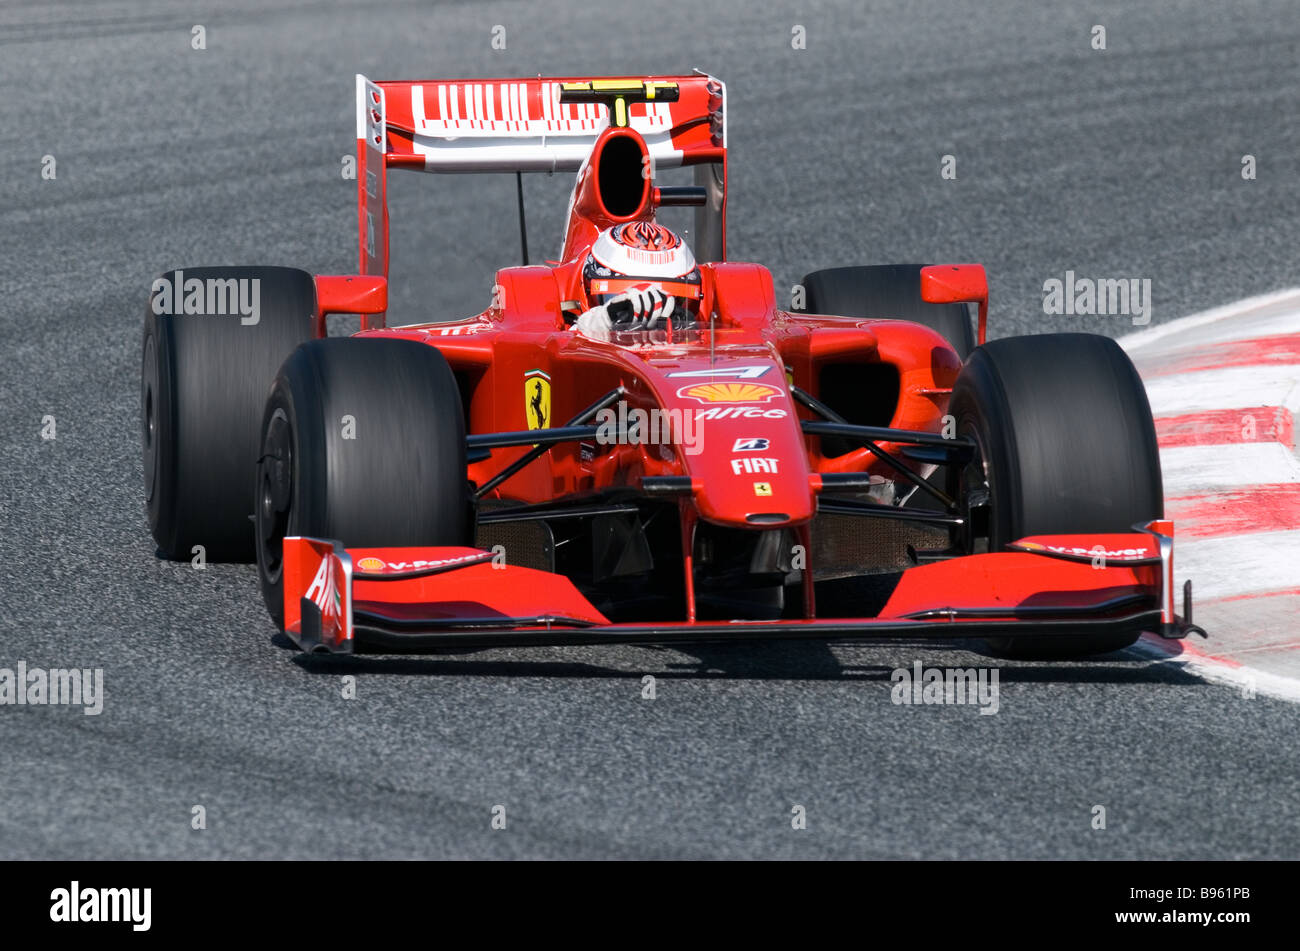 Kimi Raikkonen FIN in the Ferrari F60 racecar during Formula 1 testing ...